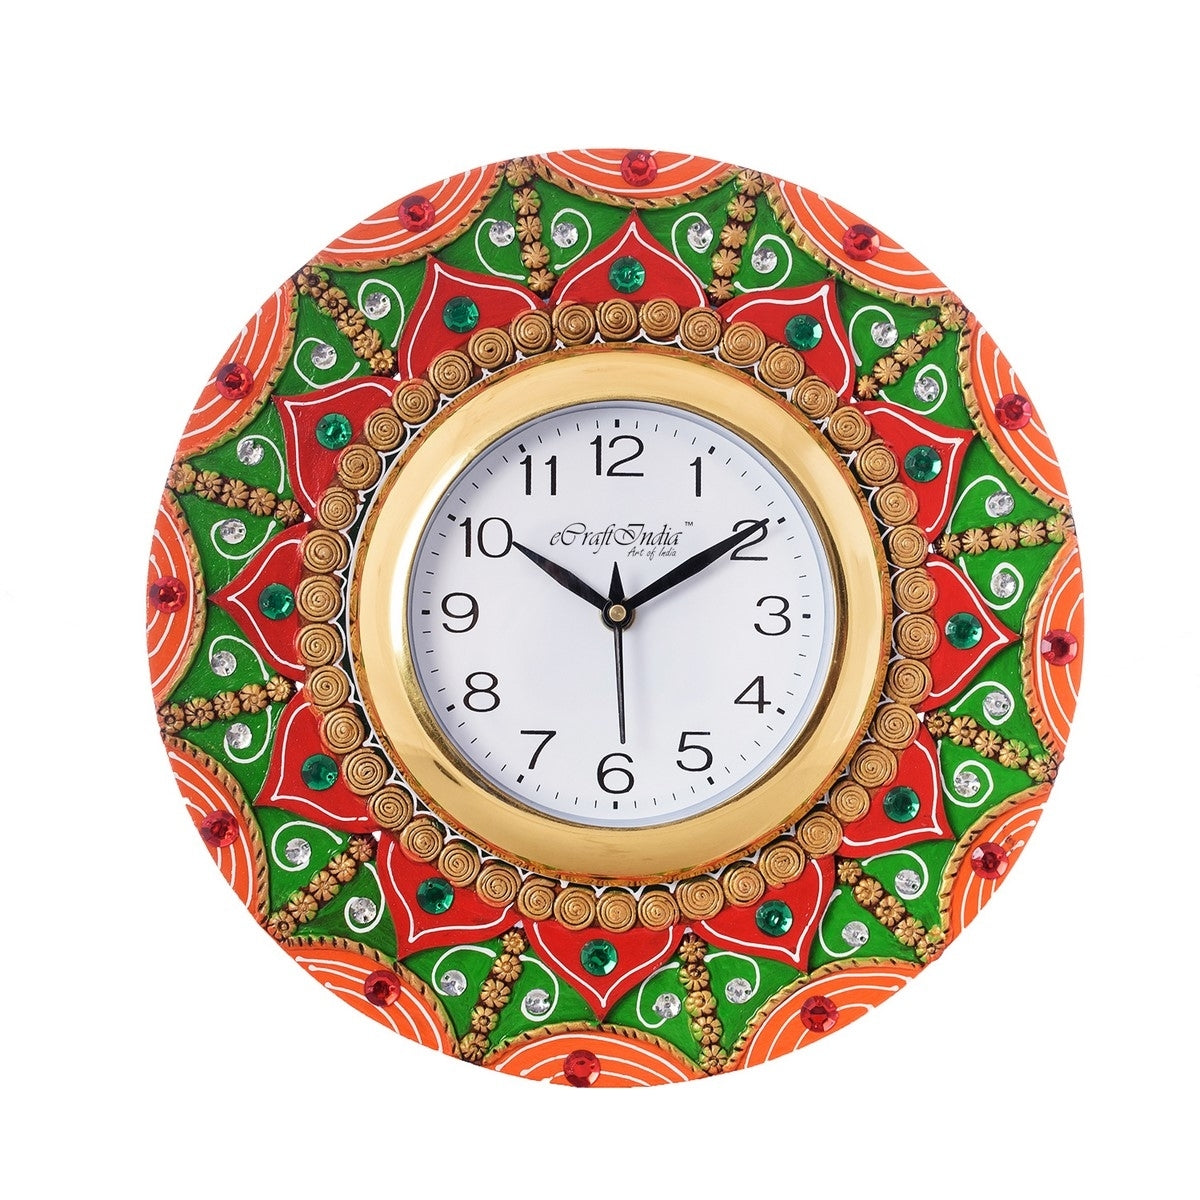 Decorative Papier-Mache Wooden Handcrafted Wall Clock